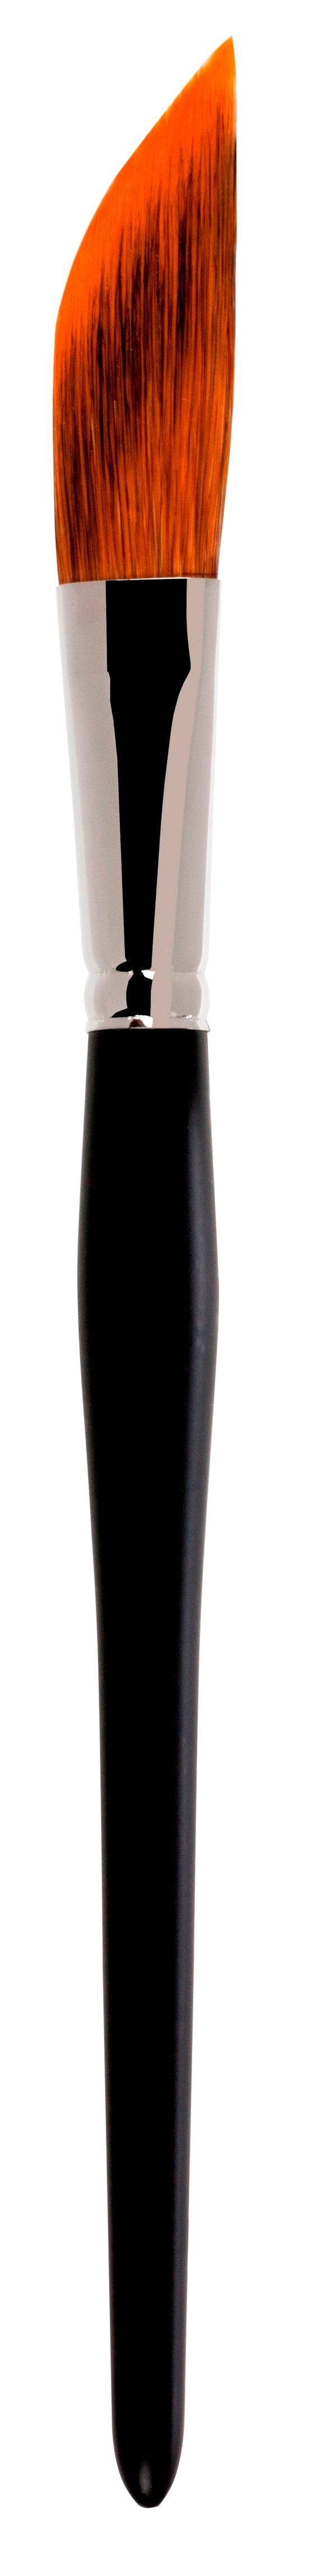 Zahn Dagger Striper Casin Synthetic-Squirrel Blend, 9289 Size 1/4